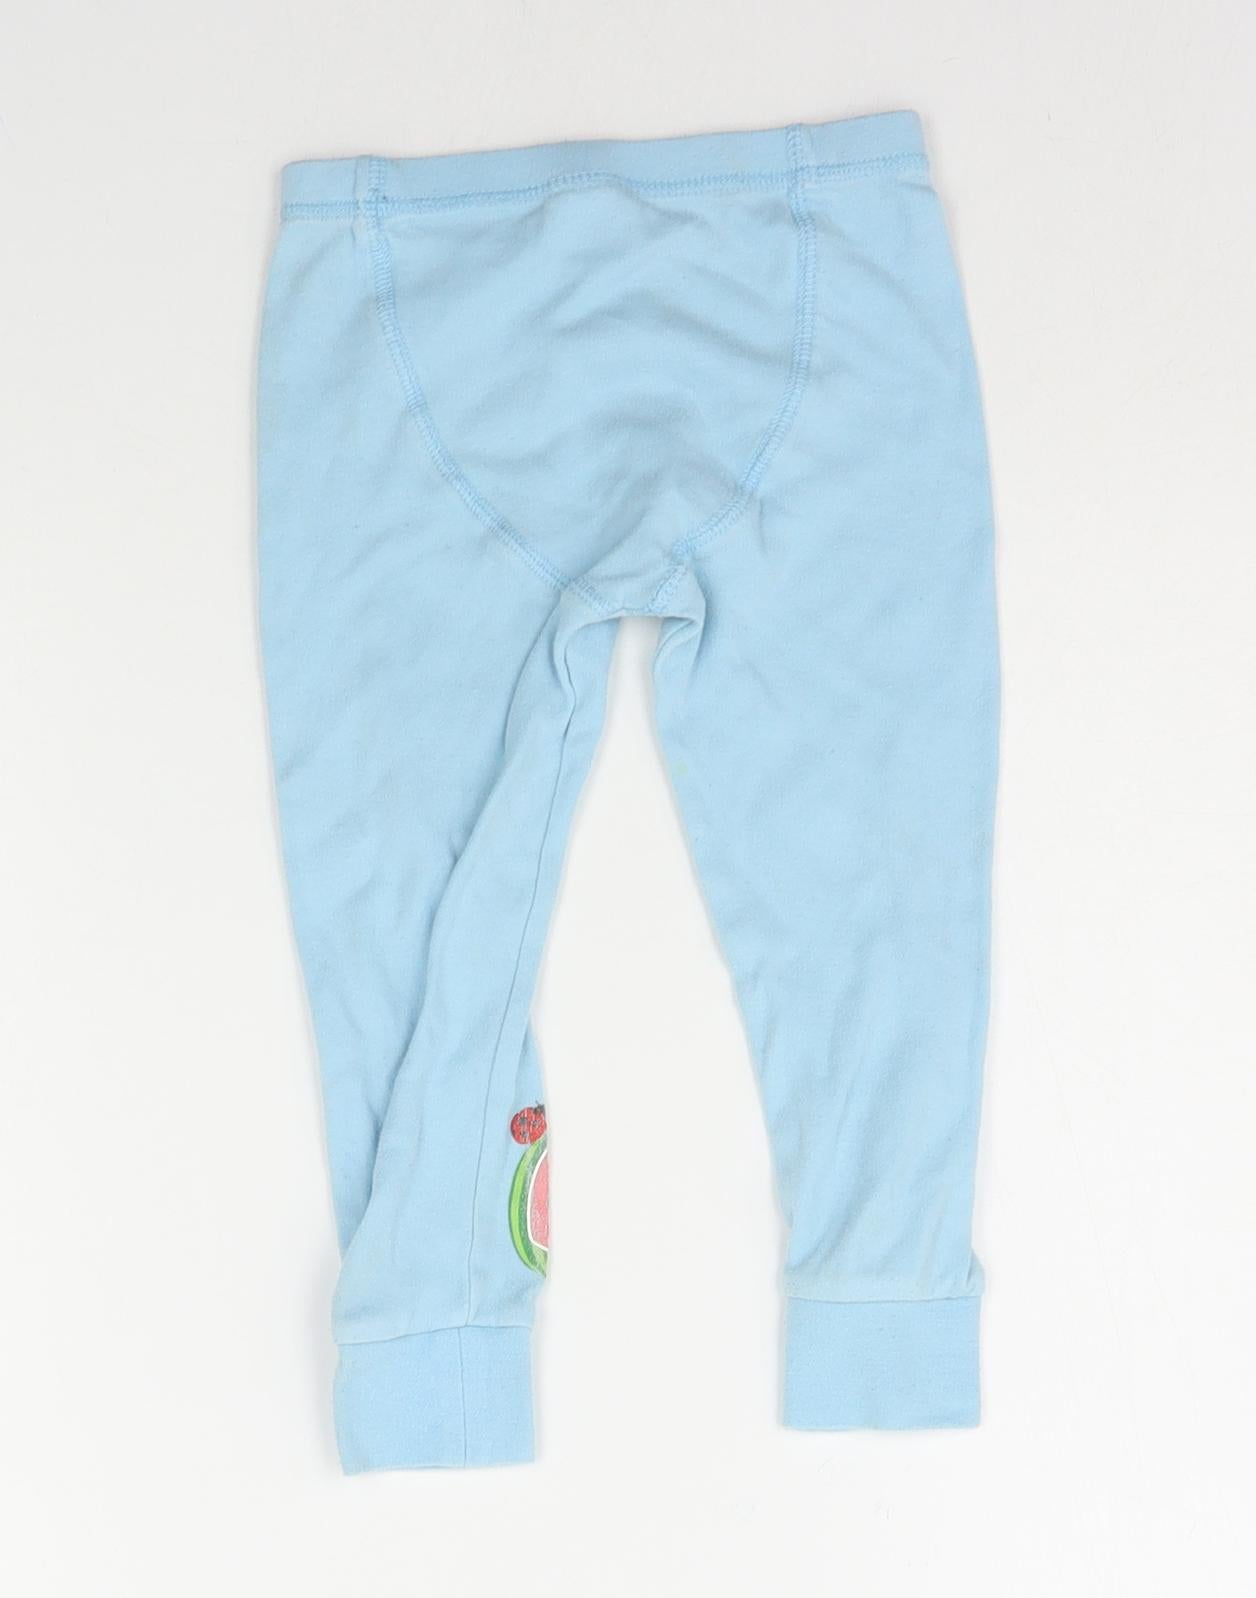 George Girls Blue Solid  Top Pyjama Pants Size 2-3 Years